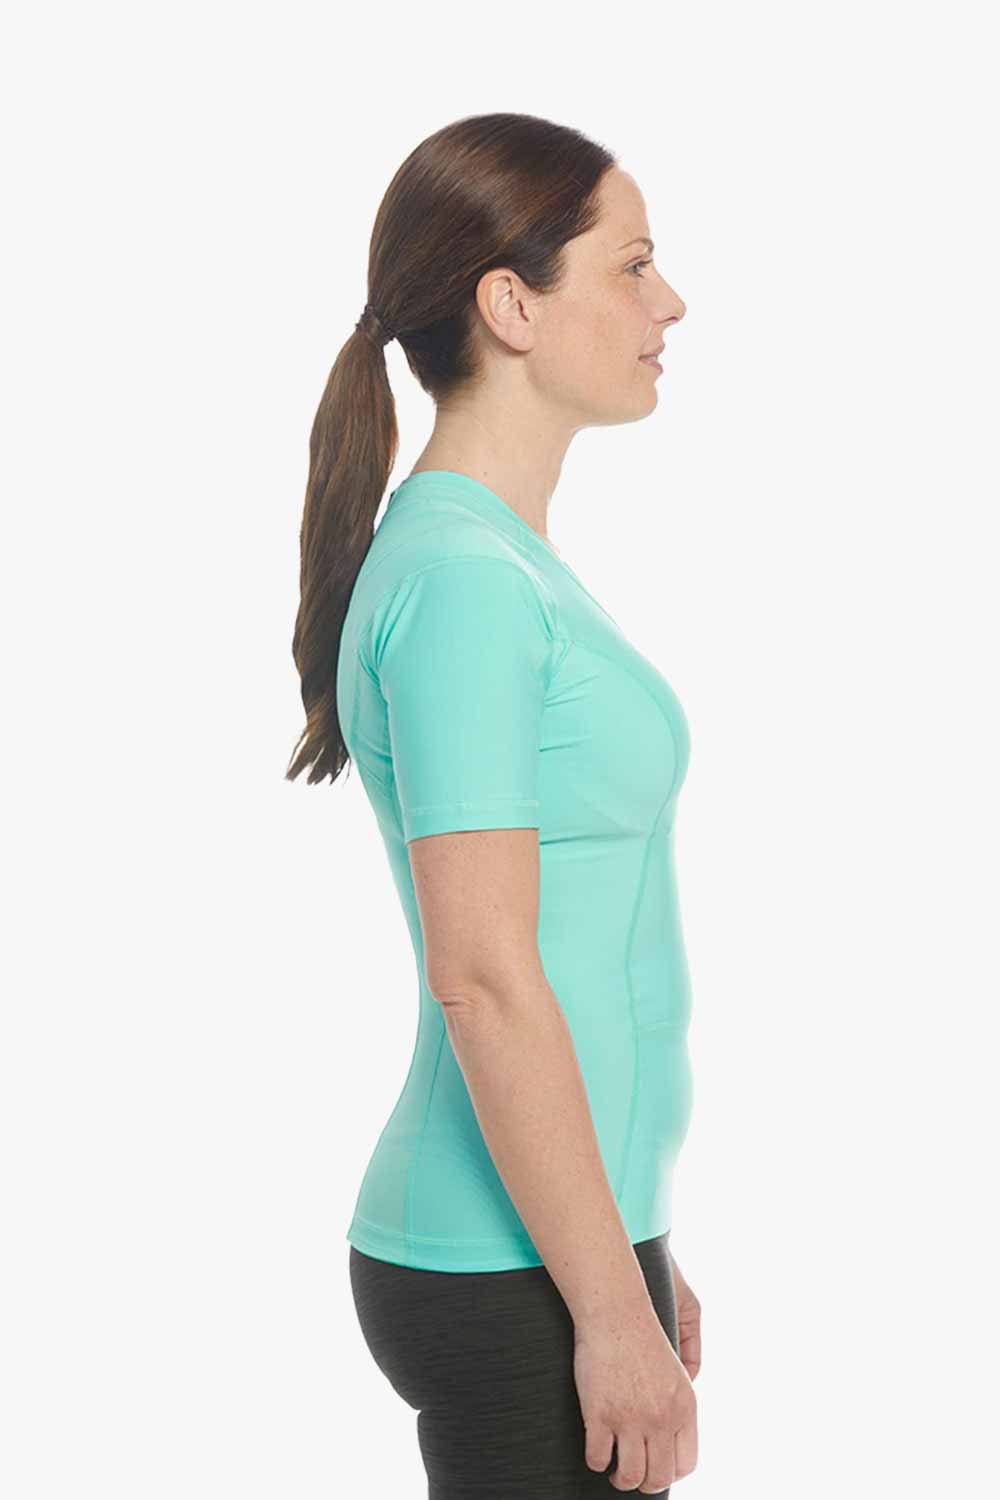 DEMO - Women's Posture Shirt™ - Mint